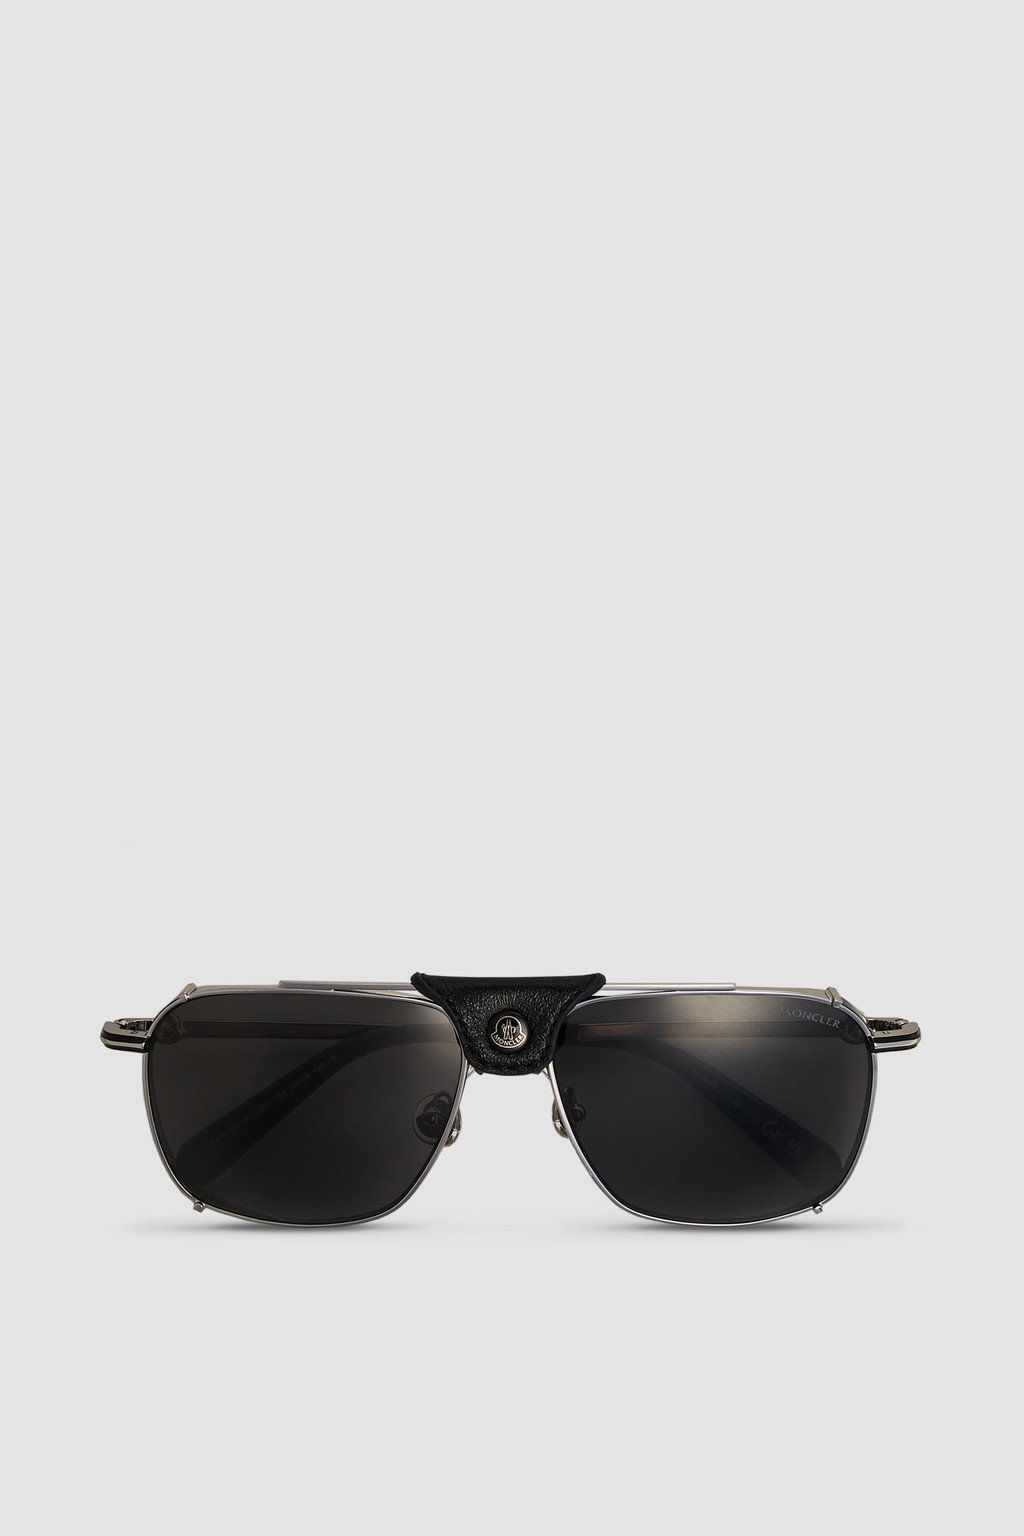 HD Polarized Photochromic Sunglasses Men Aluminium Driving Sport Glasses  Eyewear | eBay